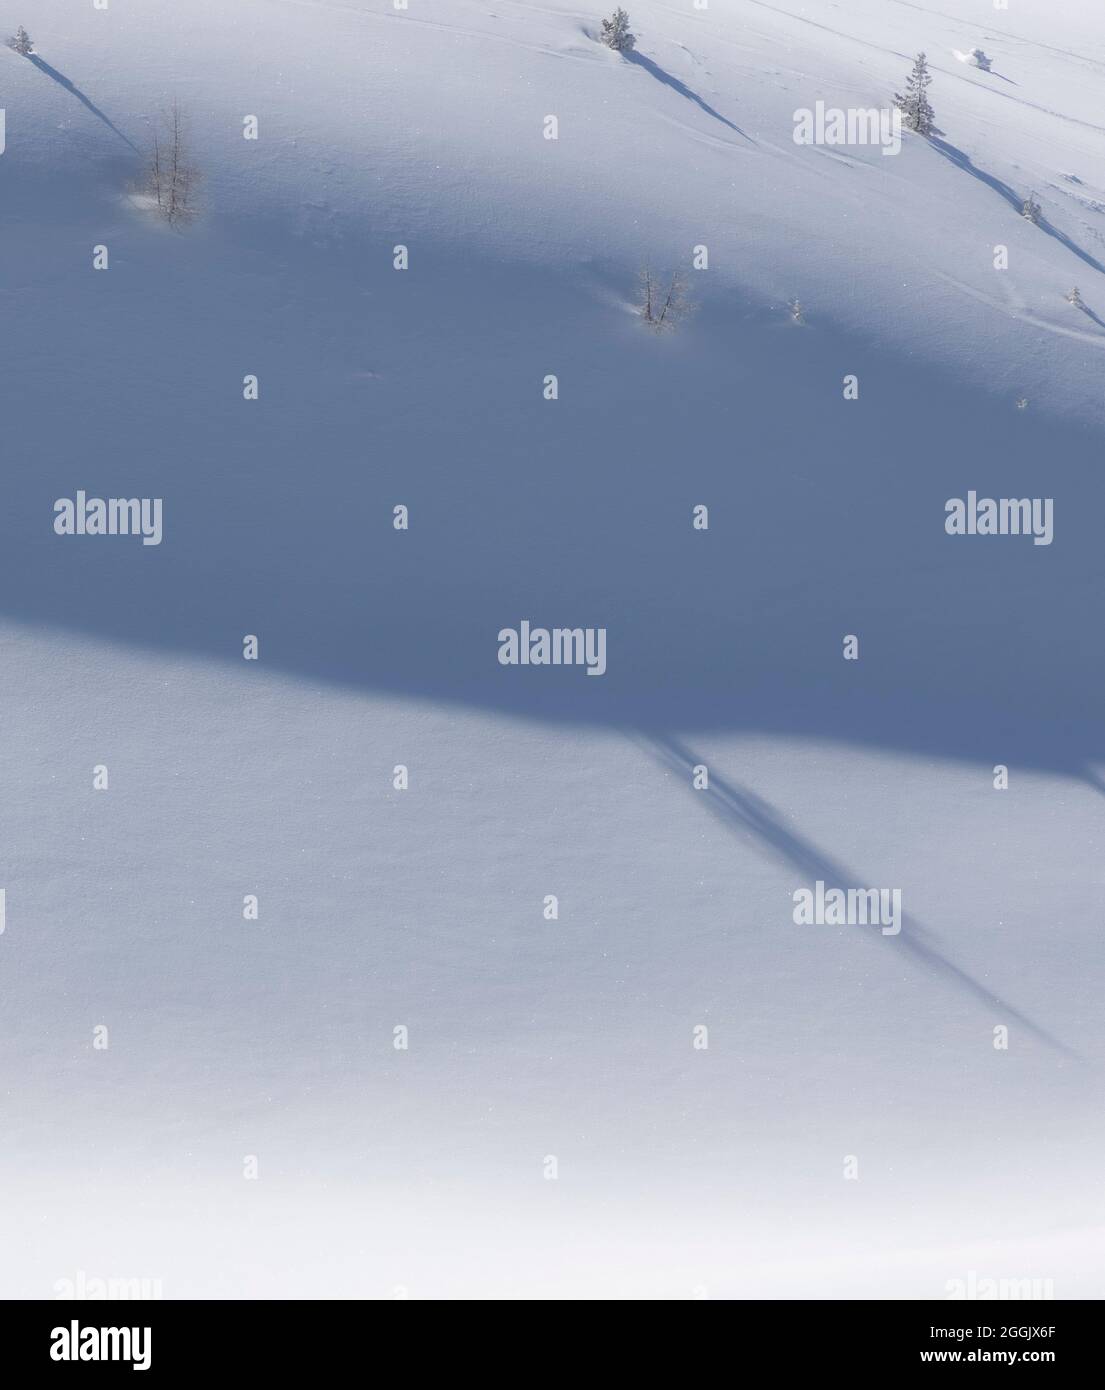 Shadows cast on the snowy mountainside Stock Photo